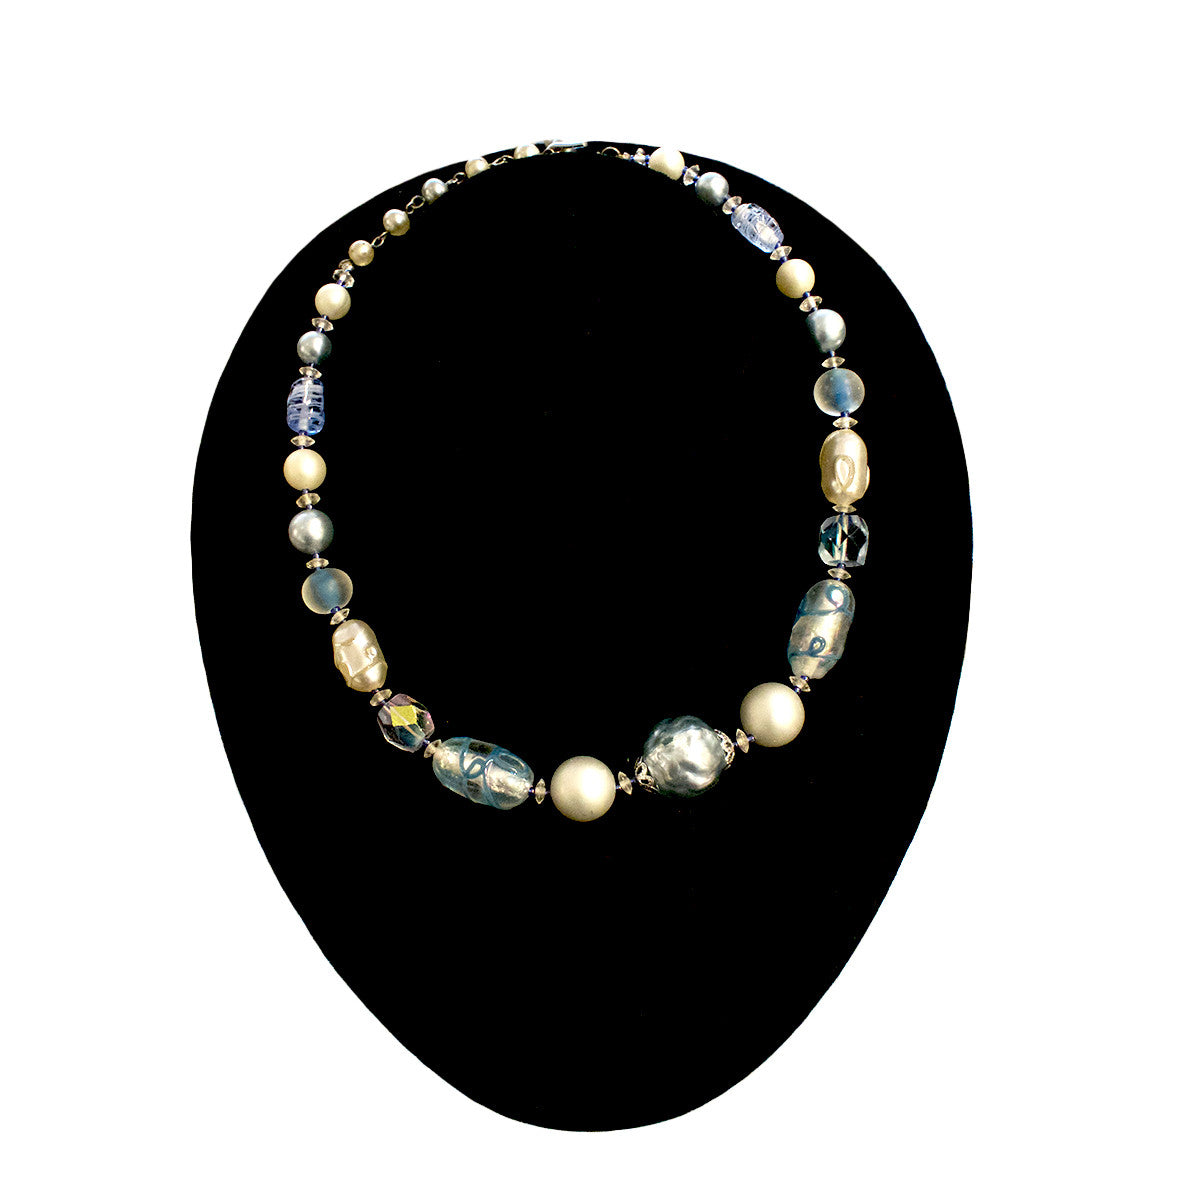 Vintage venetian glass bead necklace.